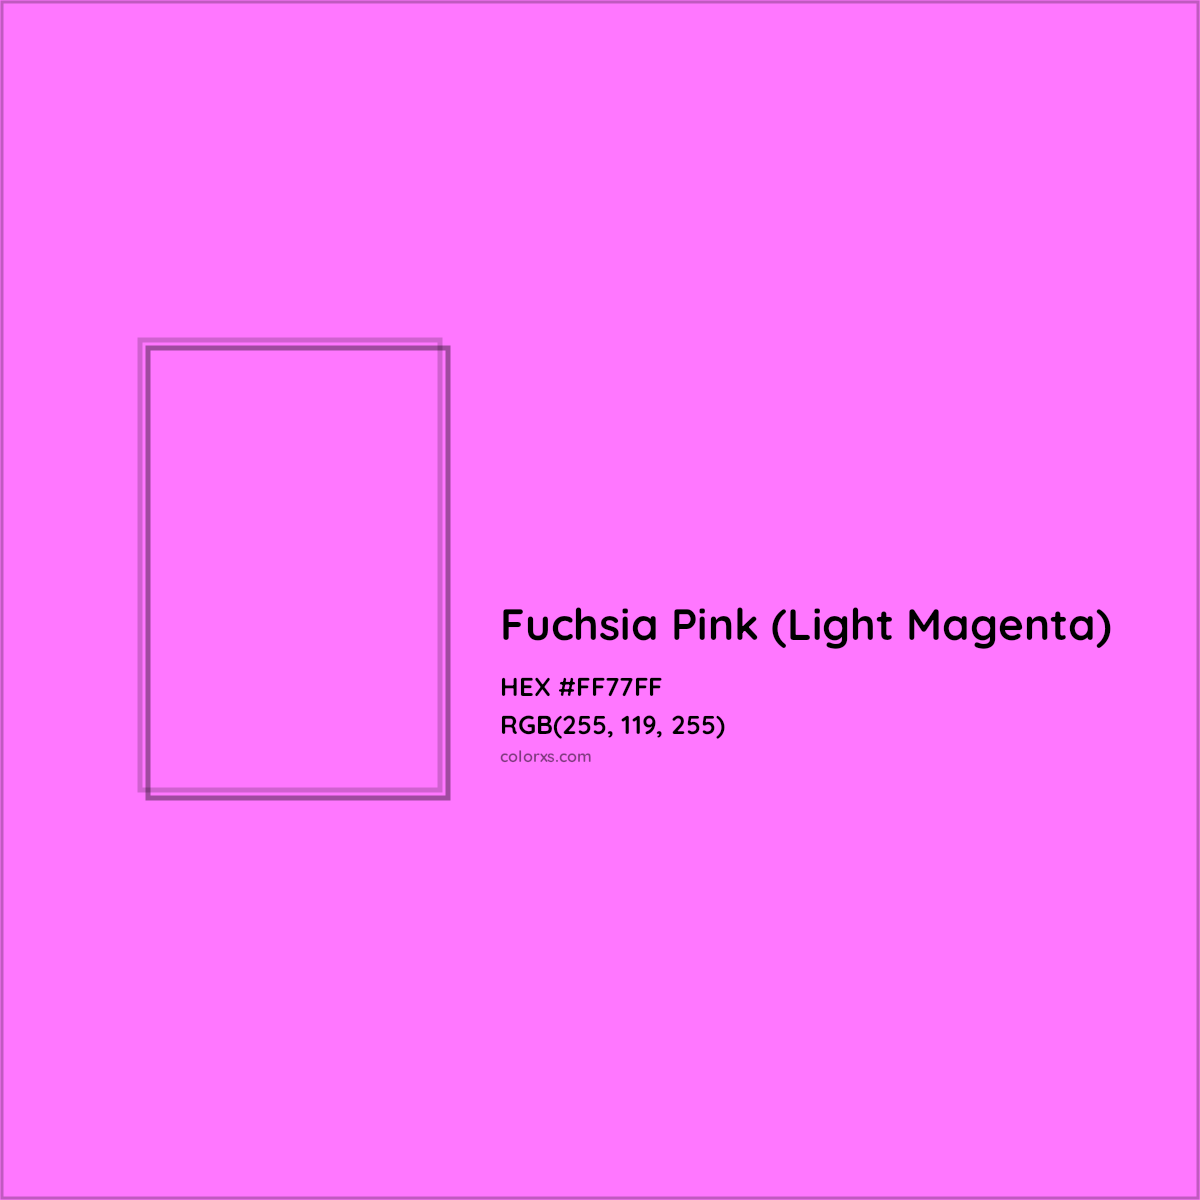 HEX #FF77FF Fuchsia Pink (Light Magenta) Color - Color Code